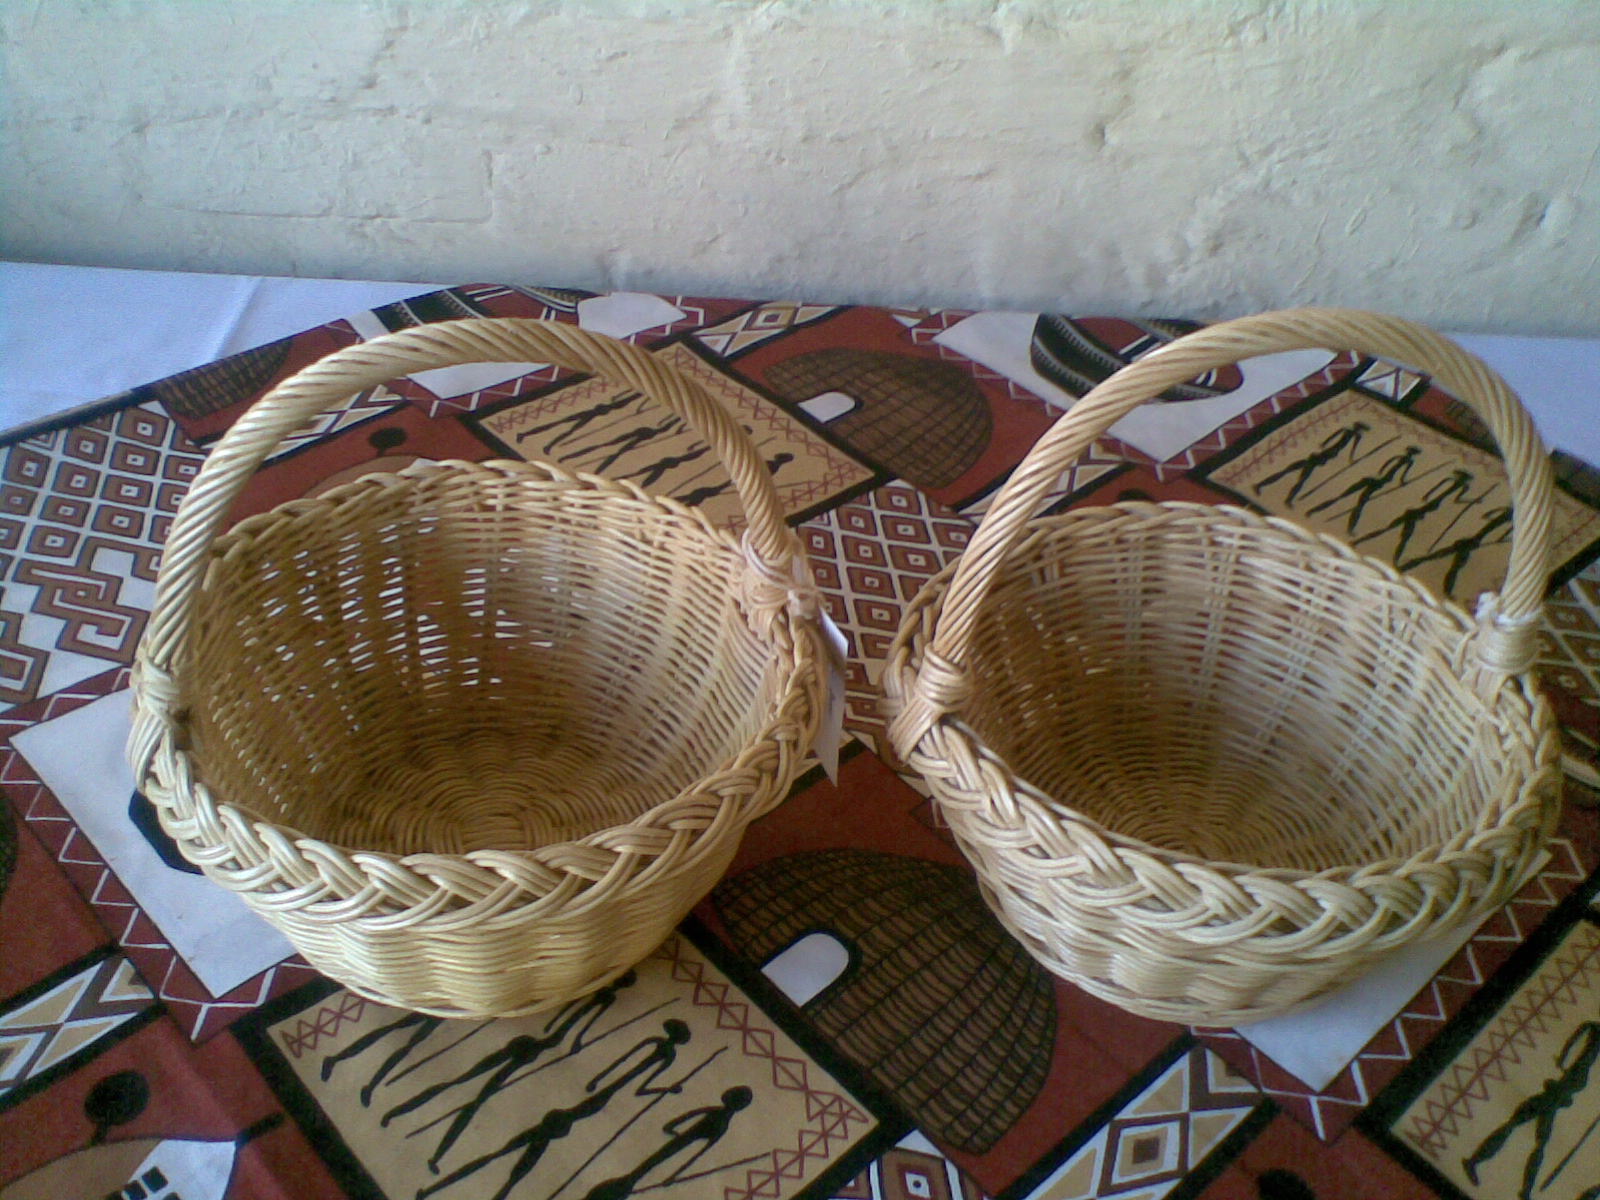 Cane weaving baskets